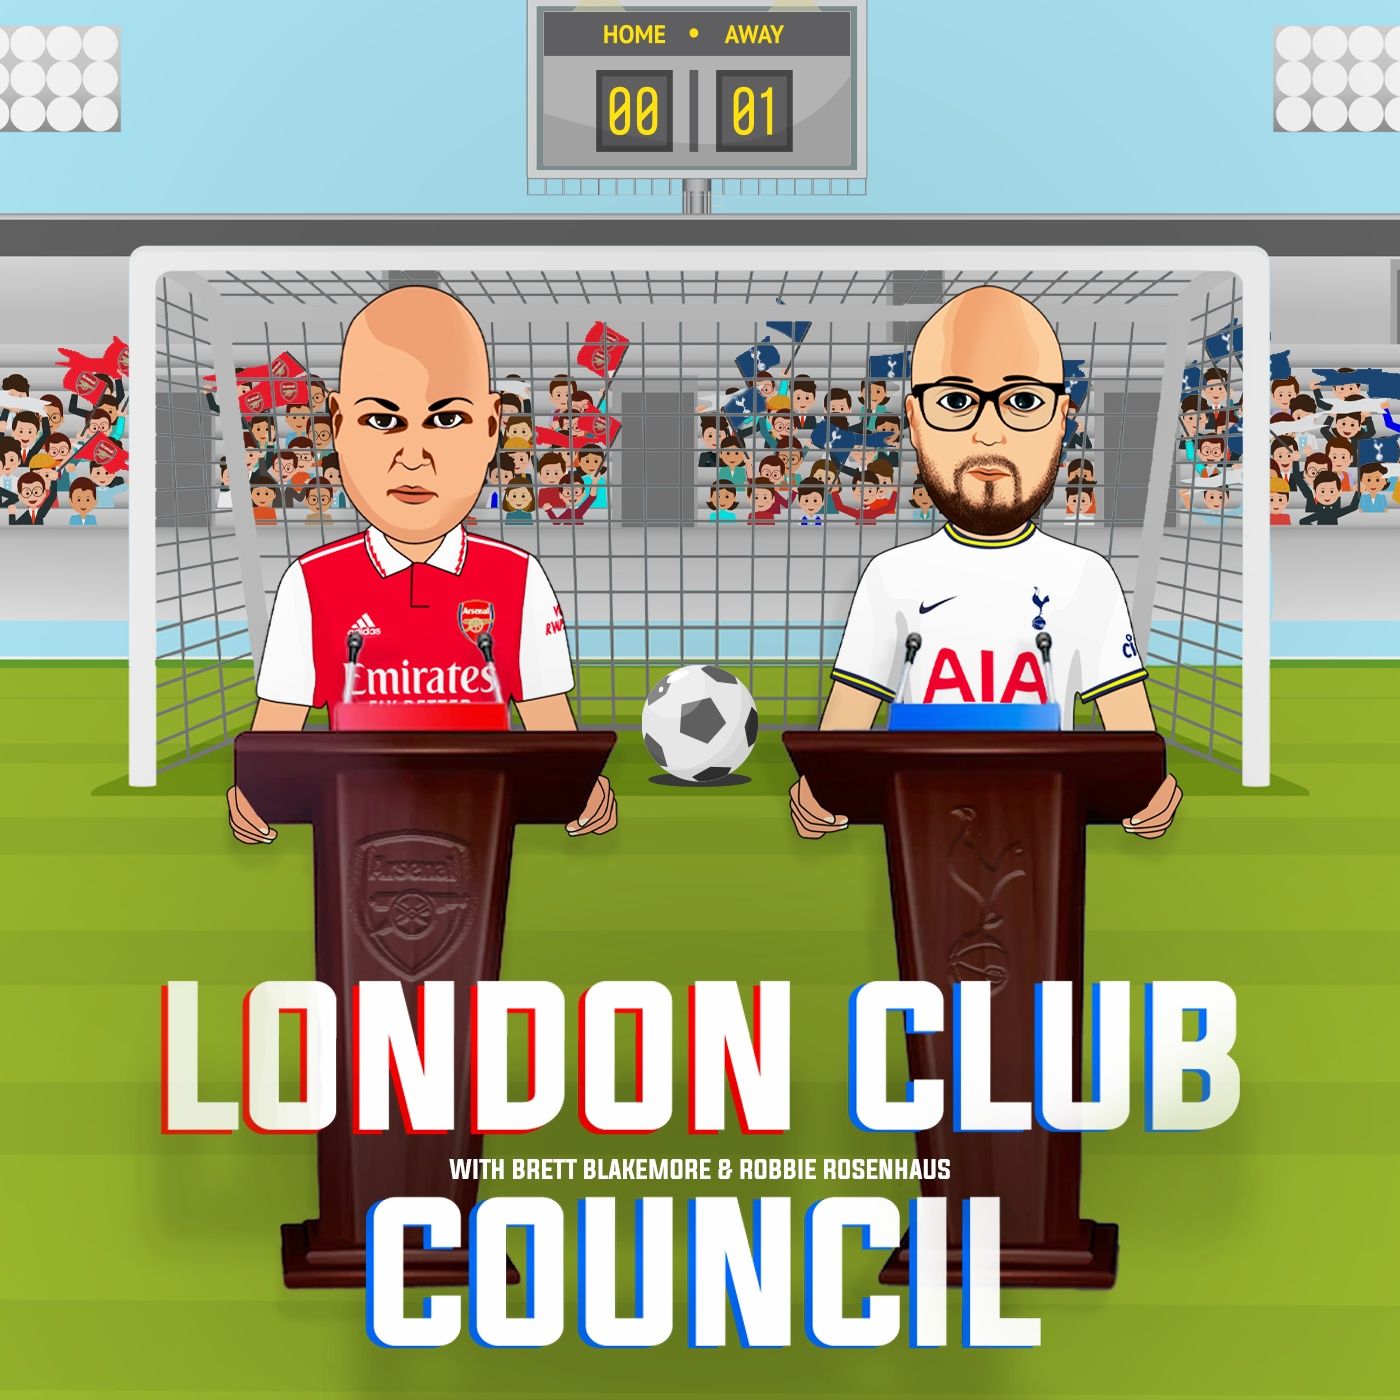 The London Club Council